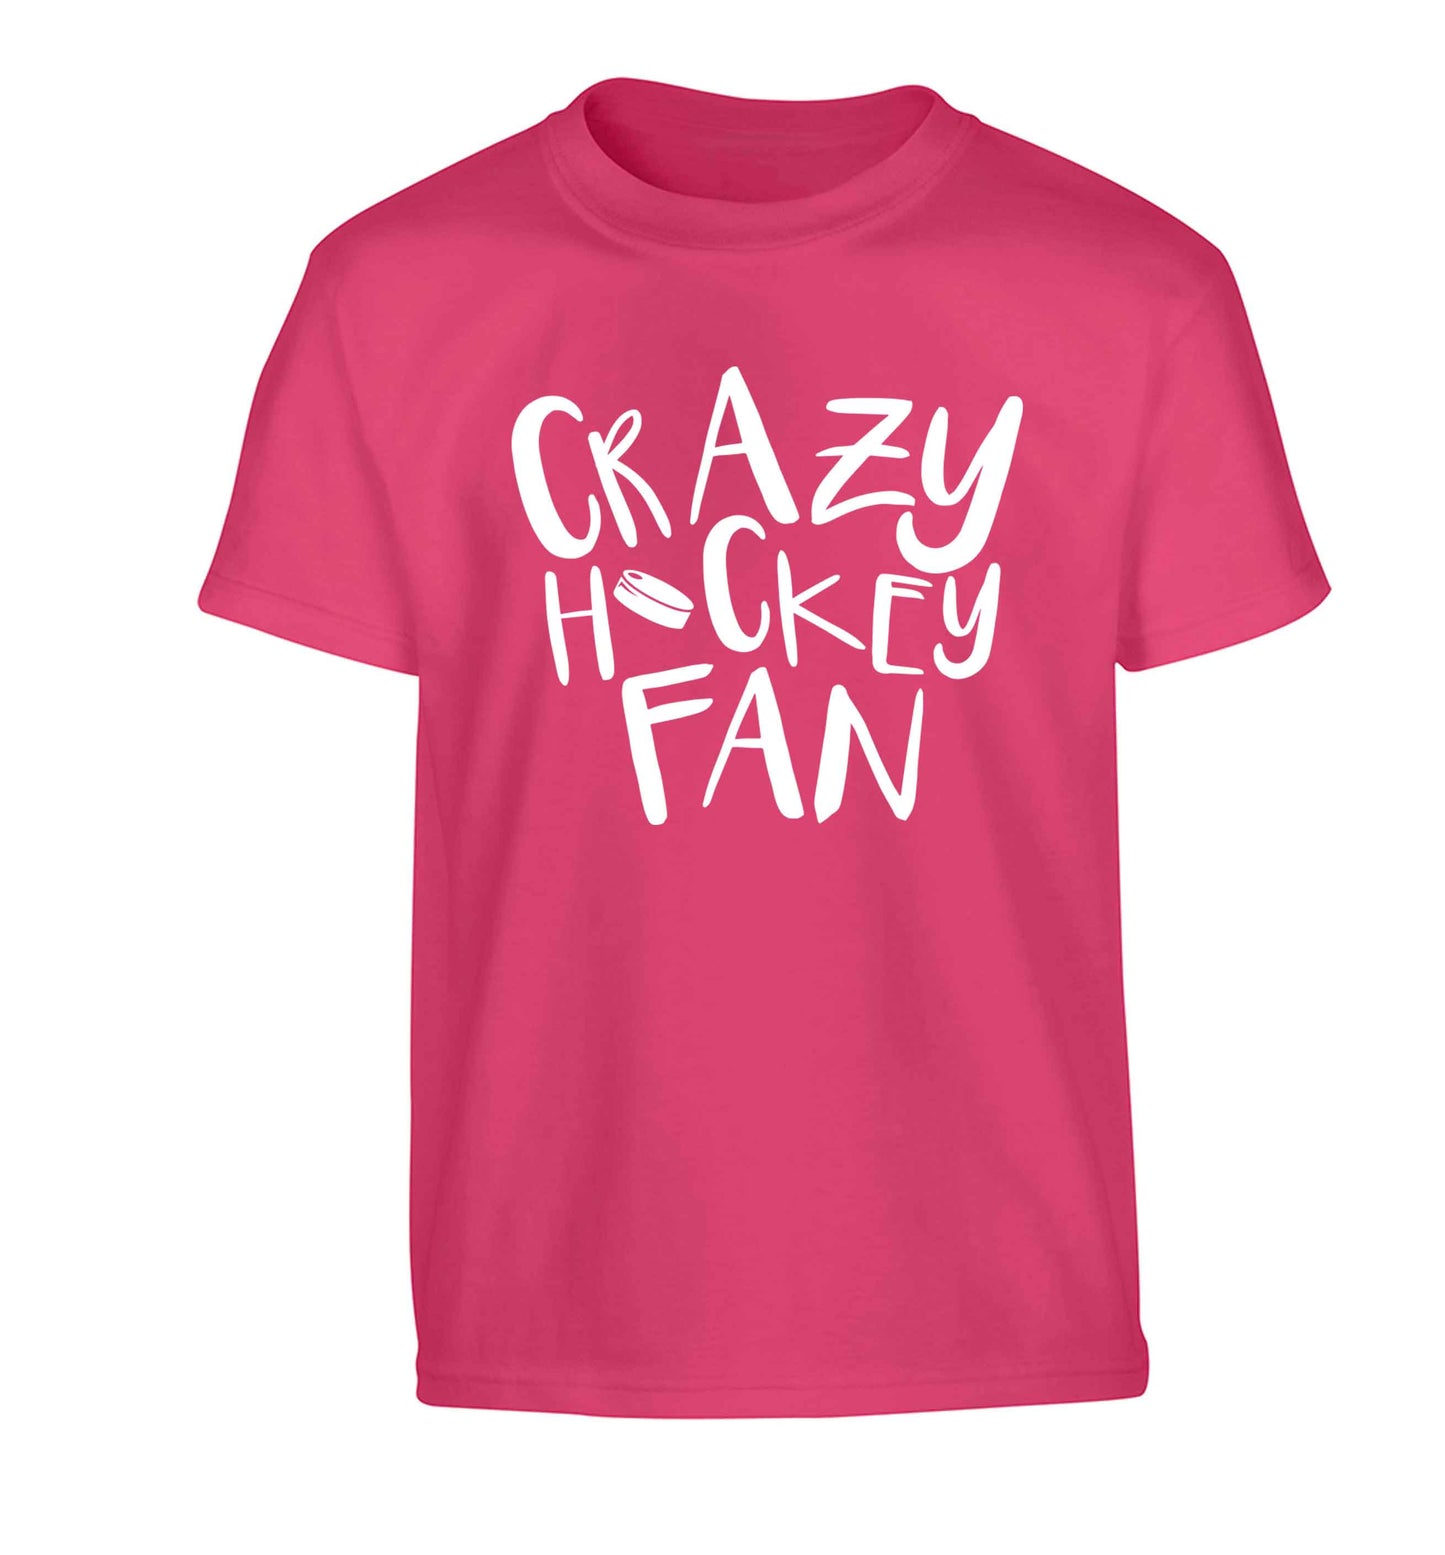 Crazy hockey fan Children's pink Tshirt 12-13 Years